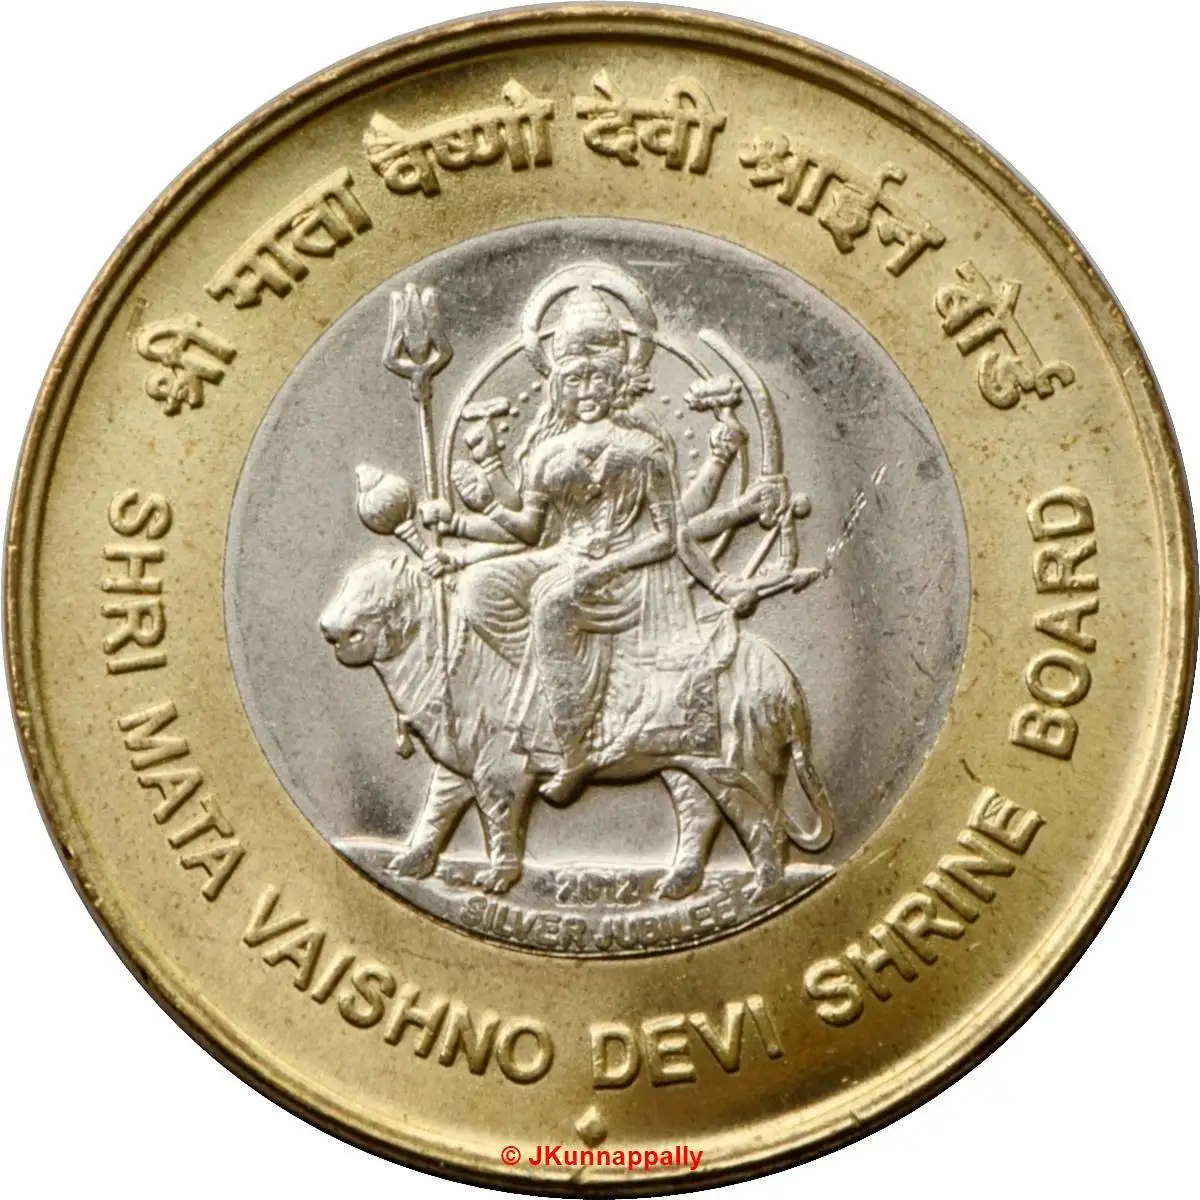 

Asian Republic of India 2012 Hindu Temple 10 Rupees Double Color Bimetal Commemorative Coin100% Original